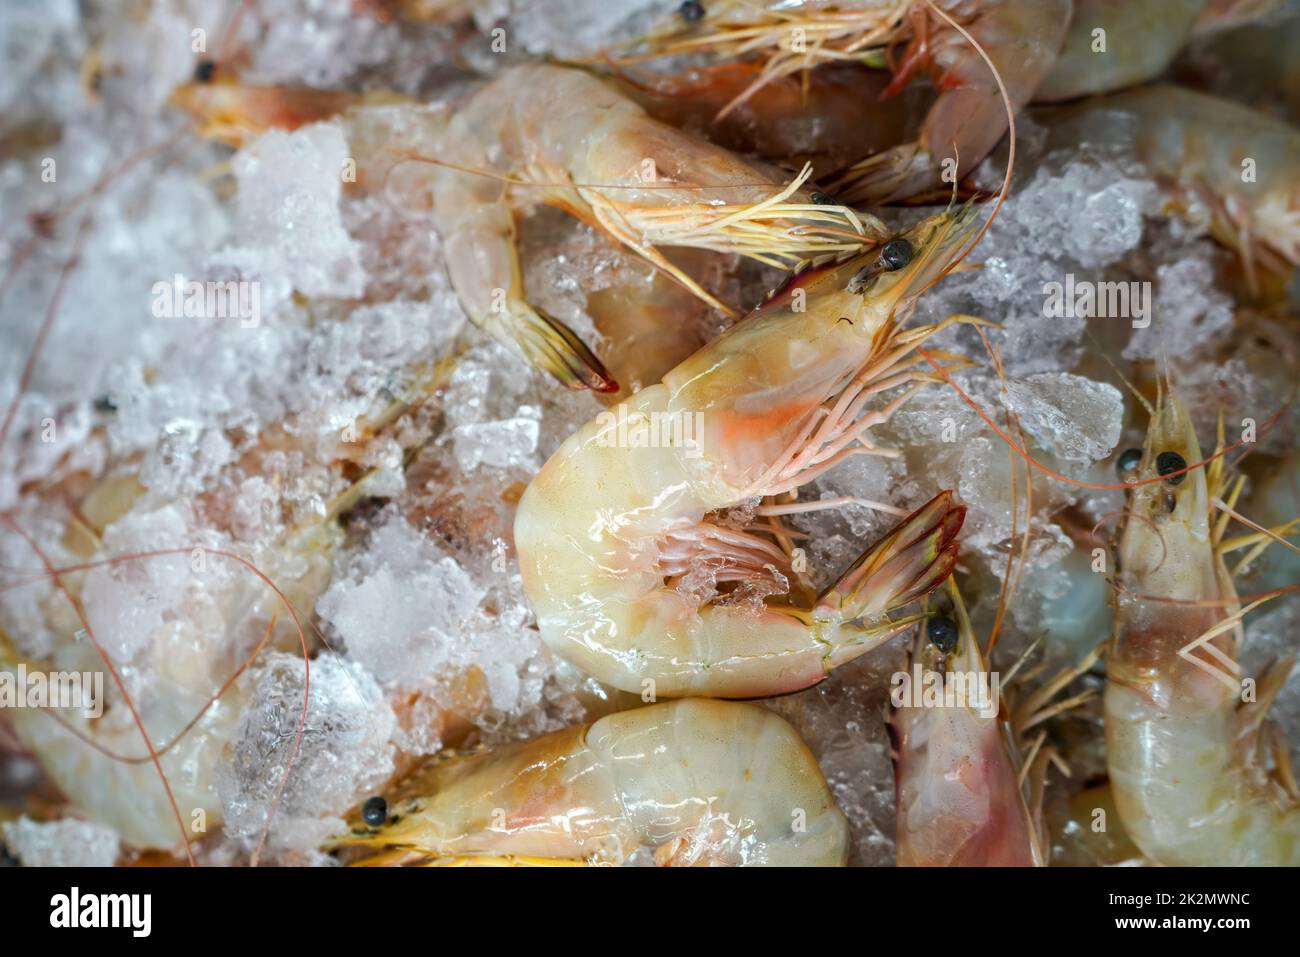 Fresh Banana shrimp (Penaeus Merguiensis) in ice bucket. Food background. Stock Photo